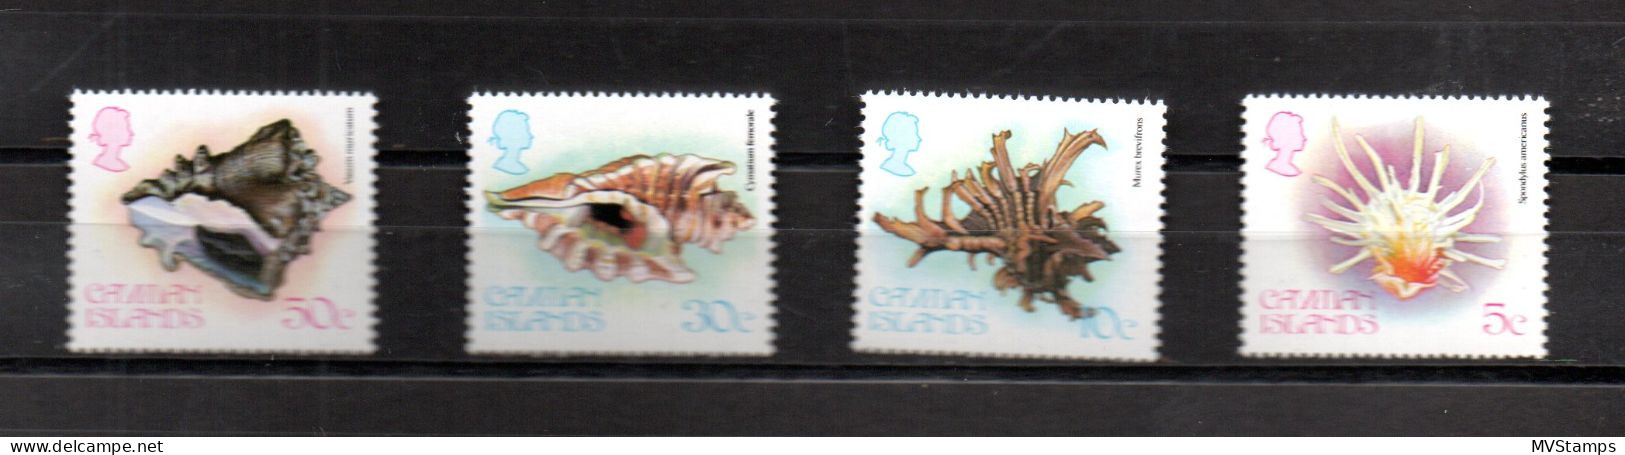 Cayman Islands 1980 Set Sealife/Fish/Meerestiere Stamps (Michel 448/51) Nice MNH - Cayman Islands